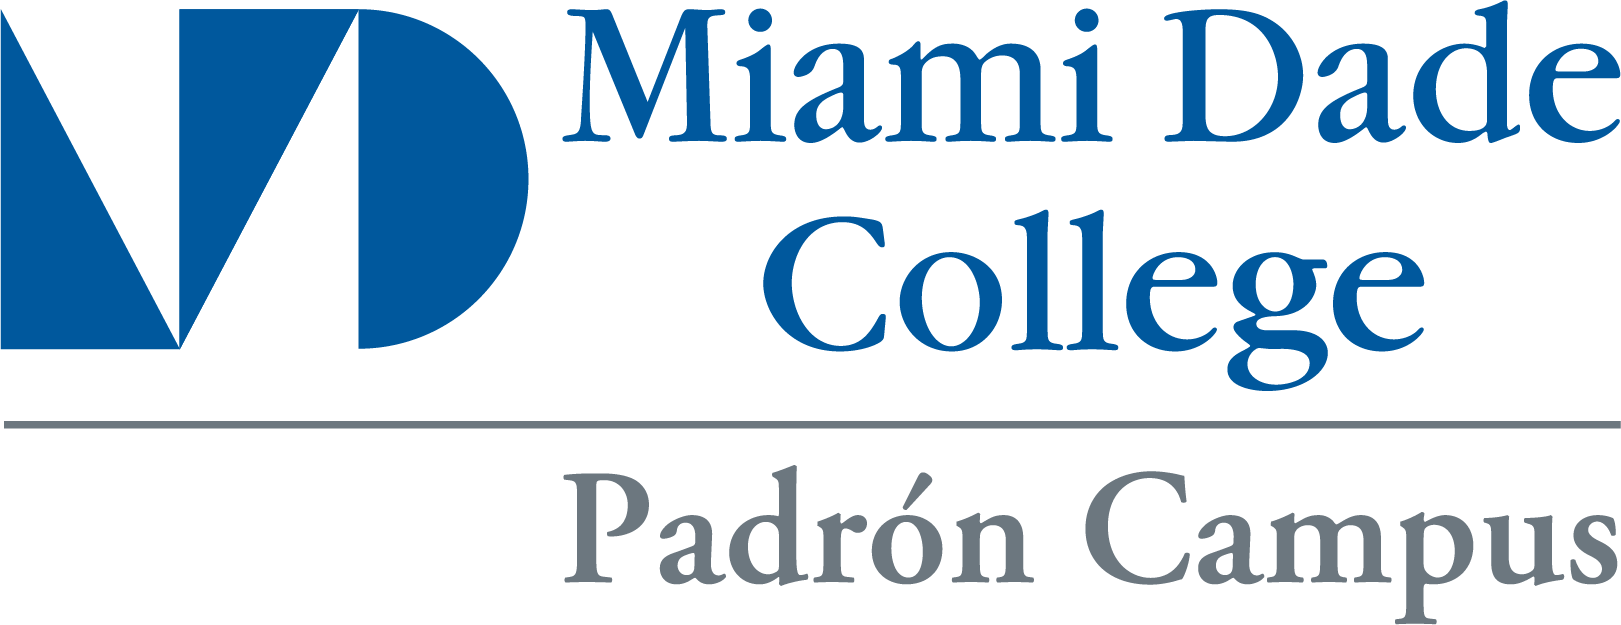 MDC Logo - Padron Campus